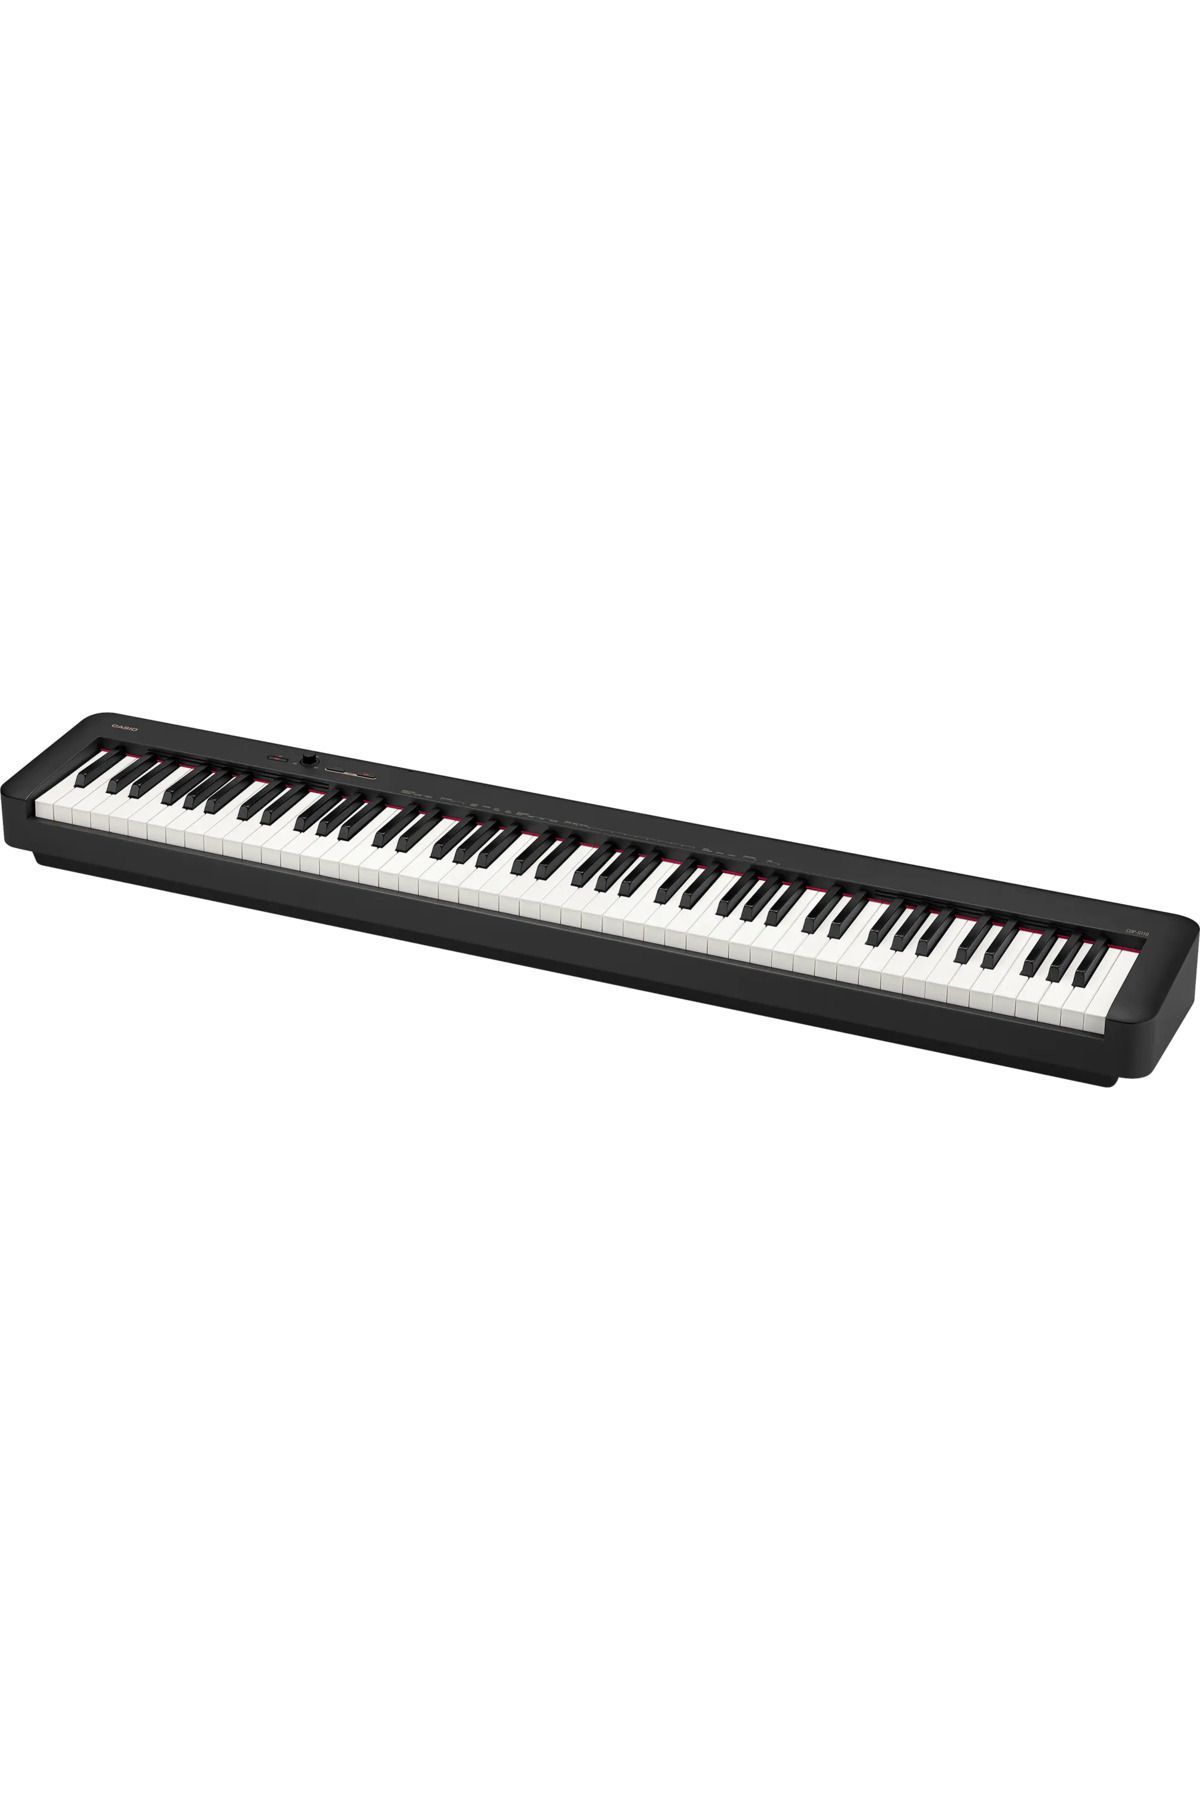 Casio Cdp-s110bk Dijital Piyano (siyah)